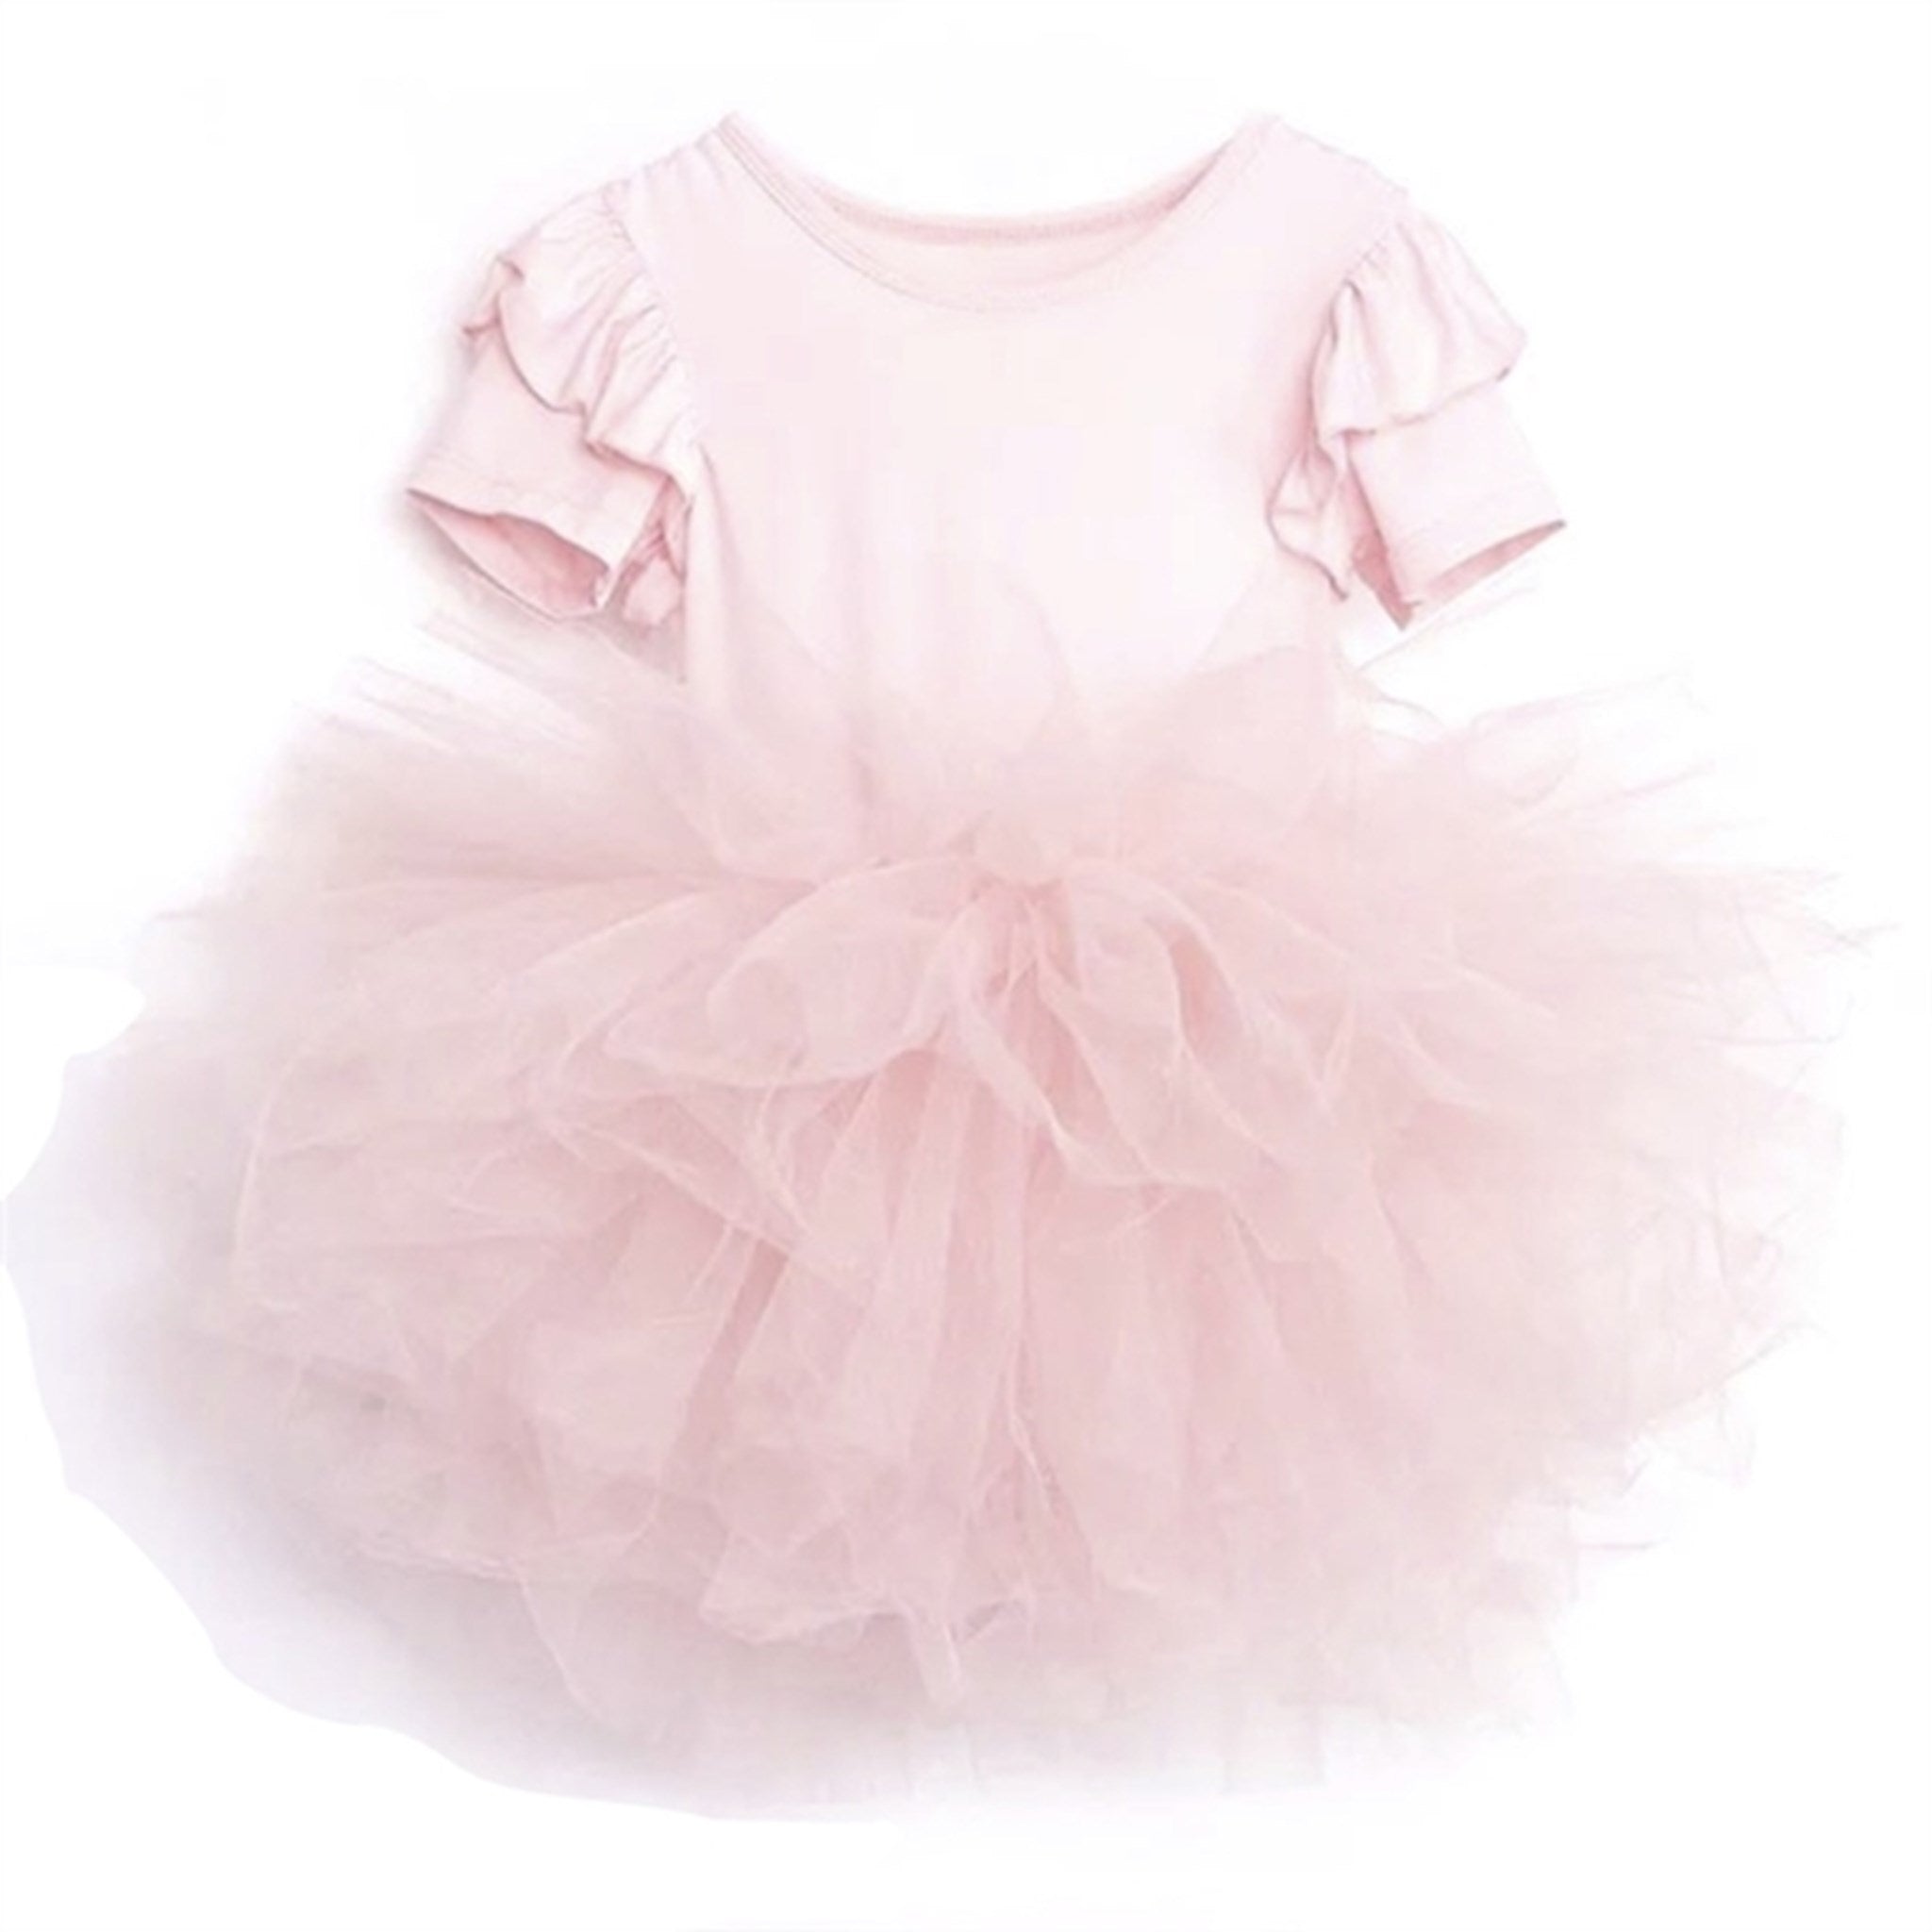 Dolly by Le Petit Timeless Short Sleeve Tutu Dress Light Pink